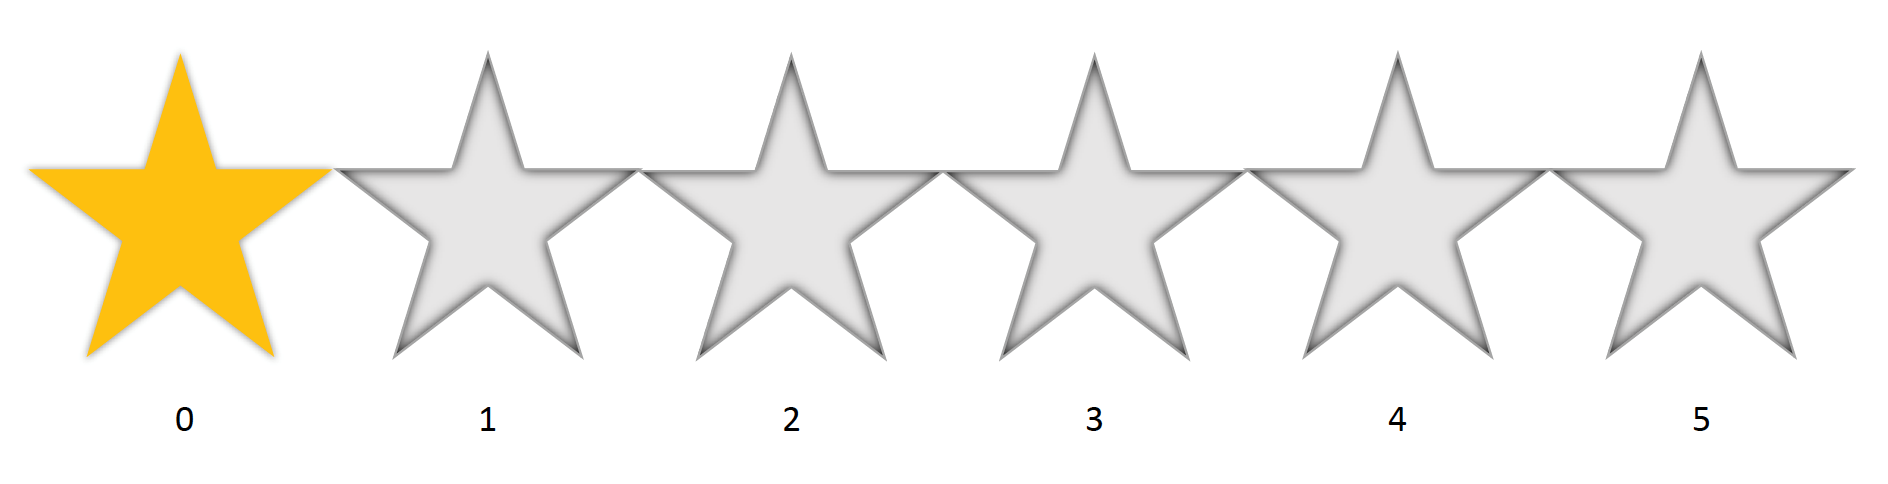 healthcare 0 star ratings